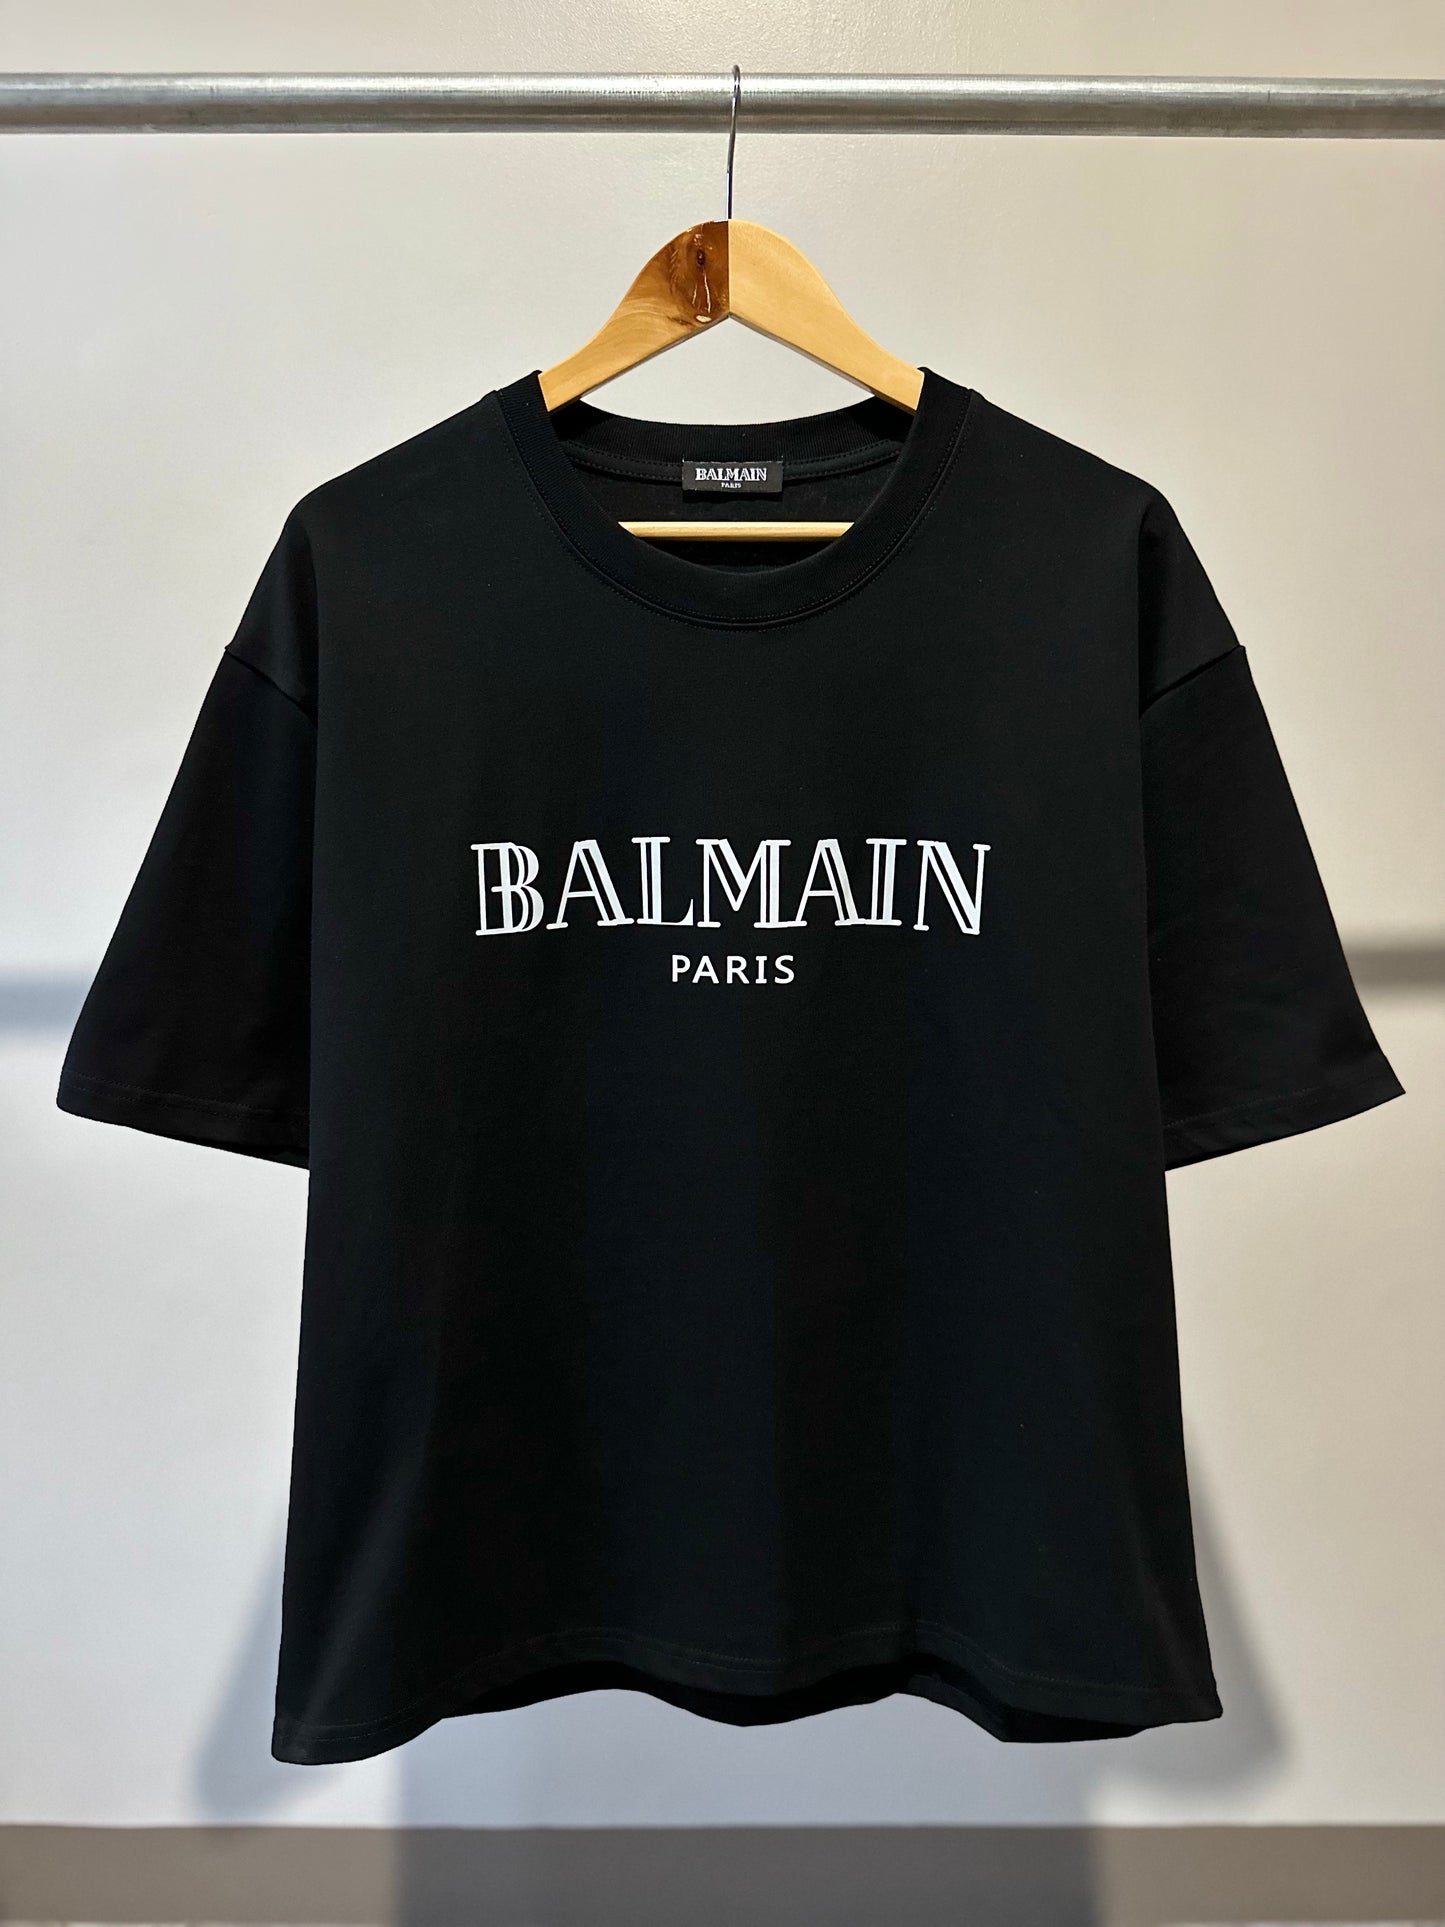 Balmain Paris Classic T-Shirt (Black)